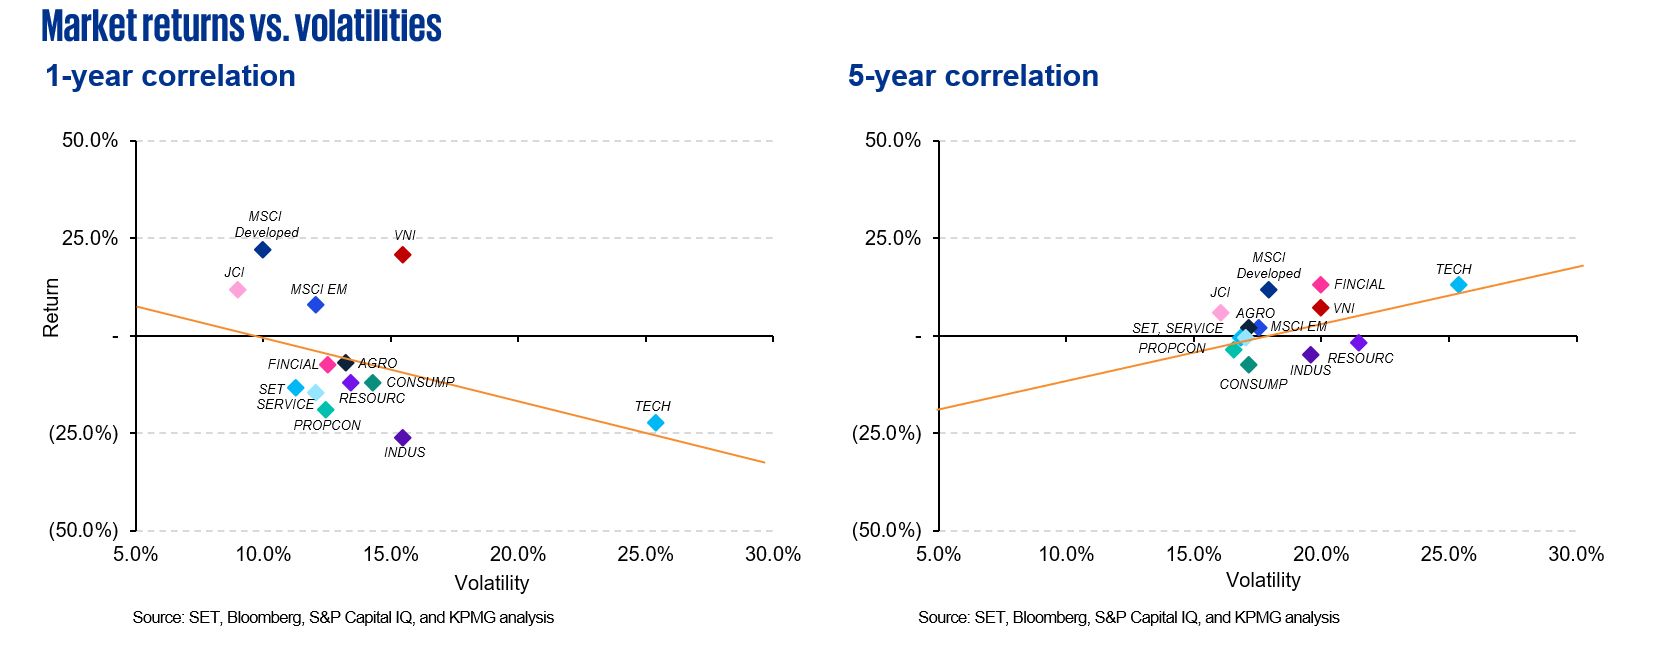 Market returns vs. volatilities